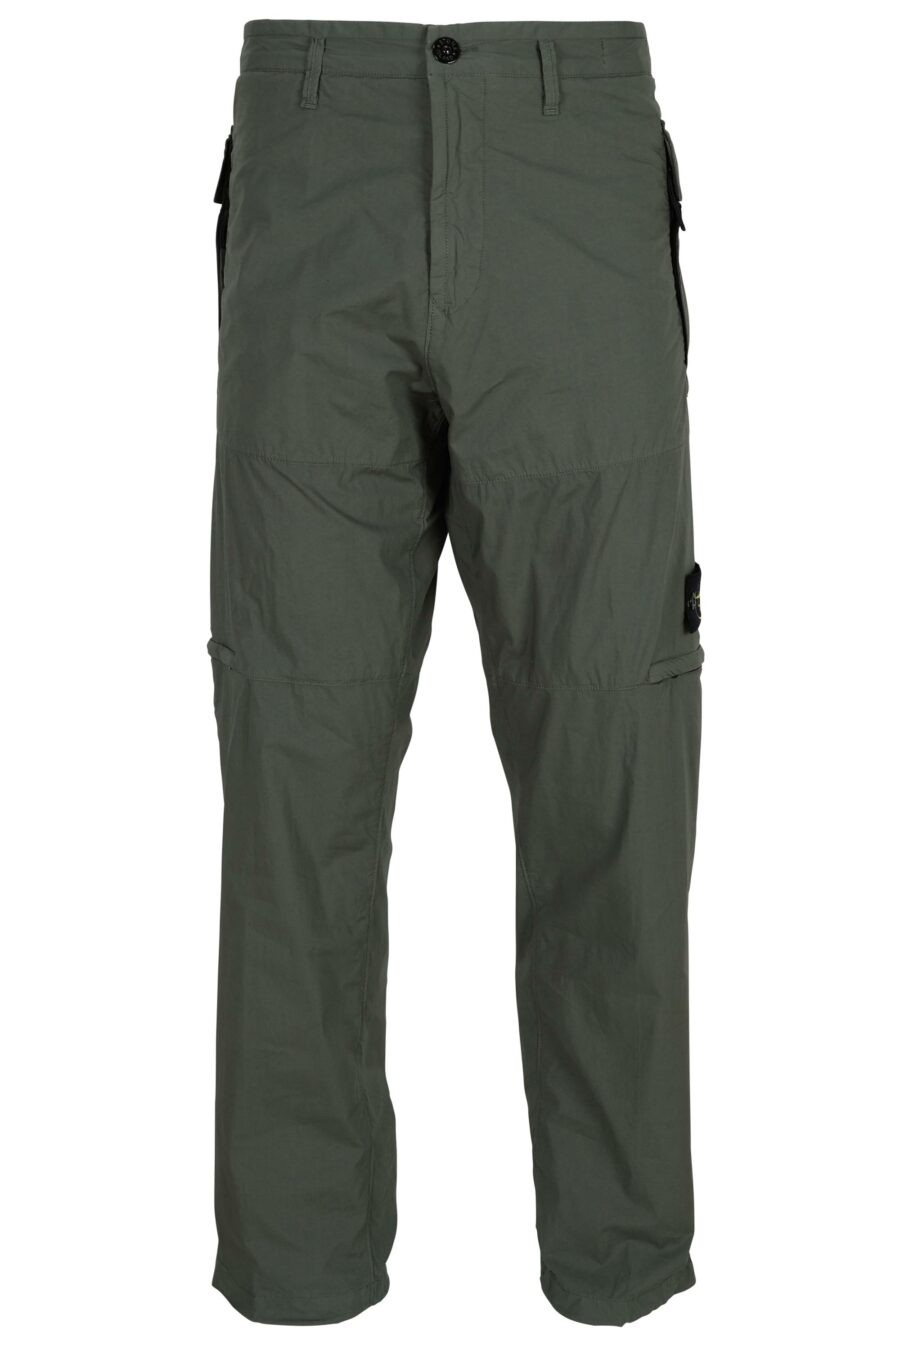 Militärgrüne "normale" Hose mit Logo-Kompass-Aufnäher - 8052572955013